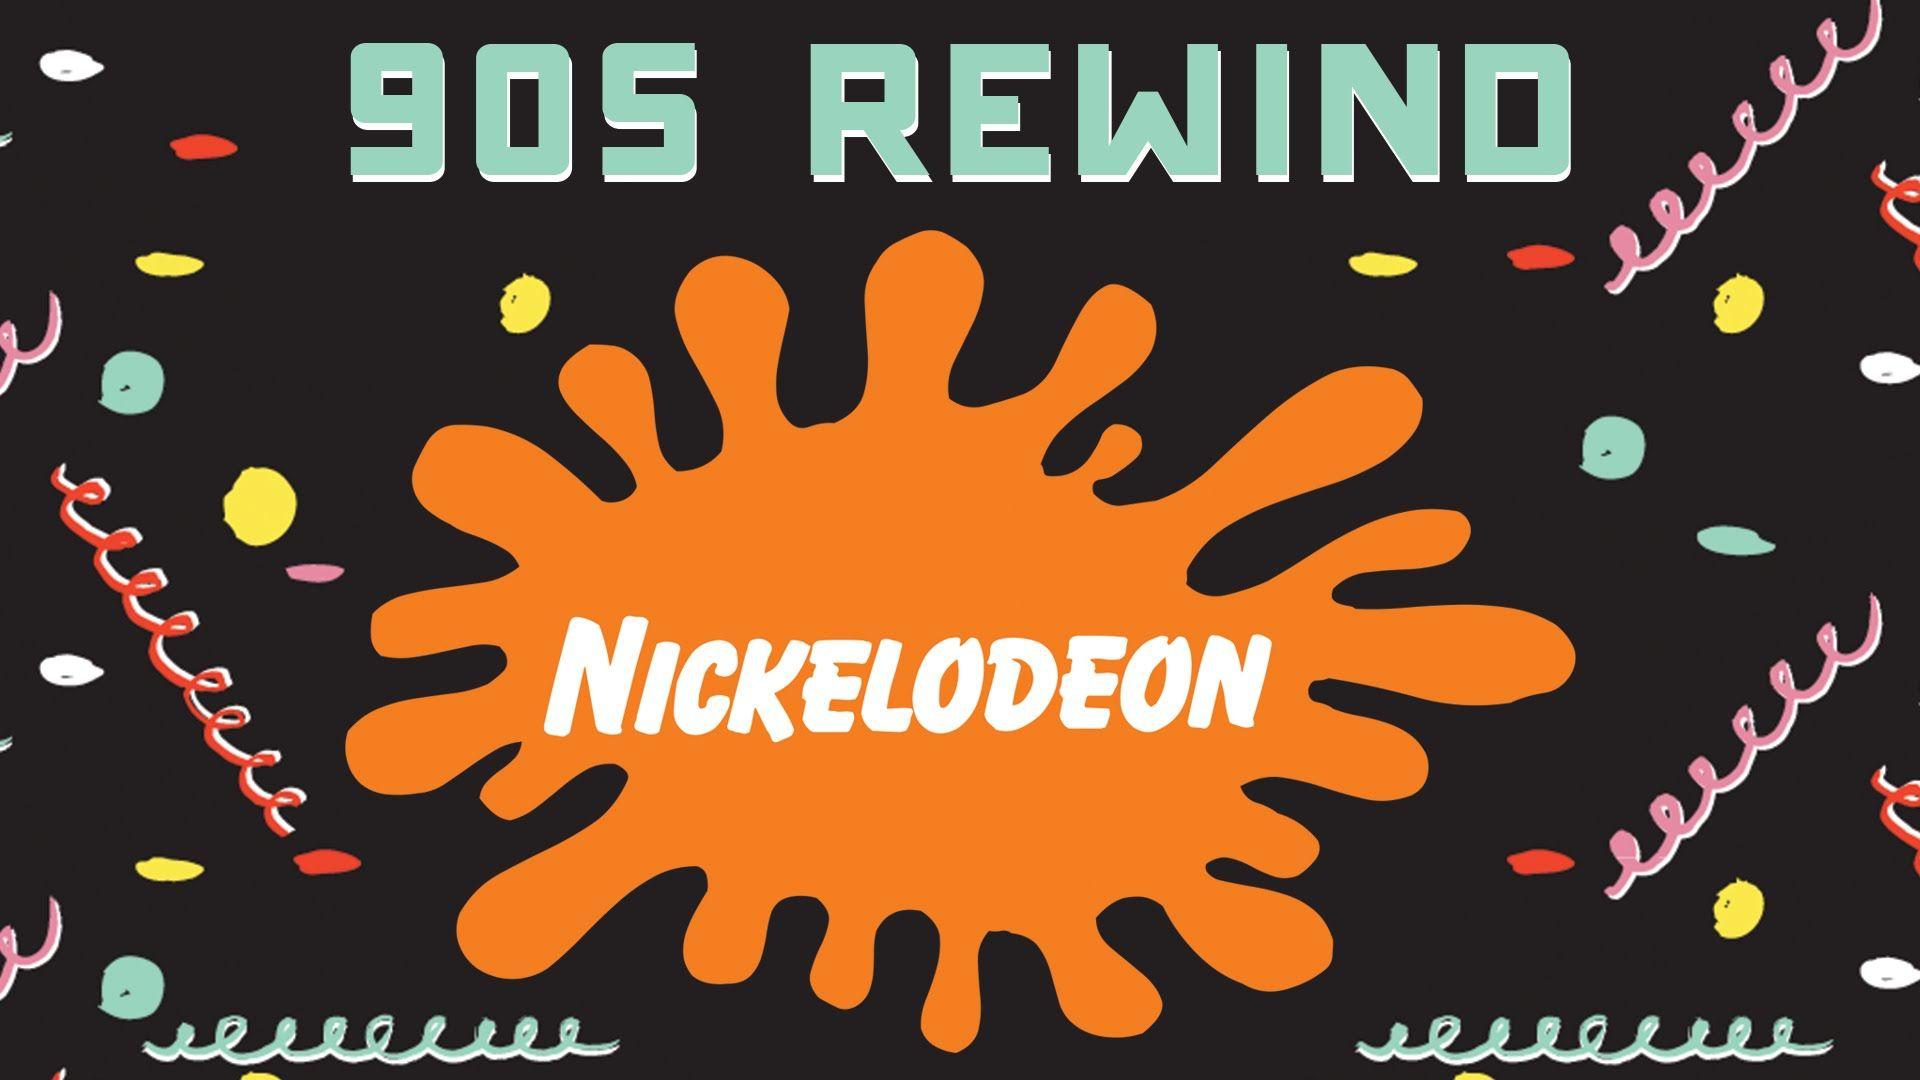 Nick show. Nickelodeon Snick. Nickelodeon заставка реклама. Nickelodeon Quiz. Nickelodeon наклейки.